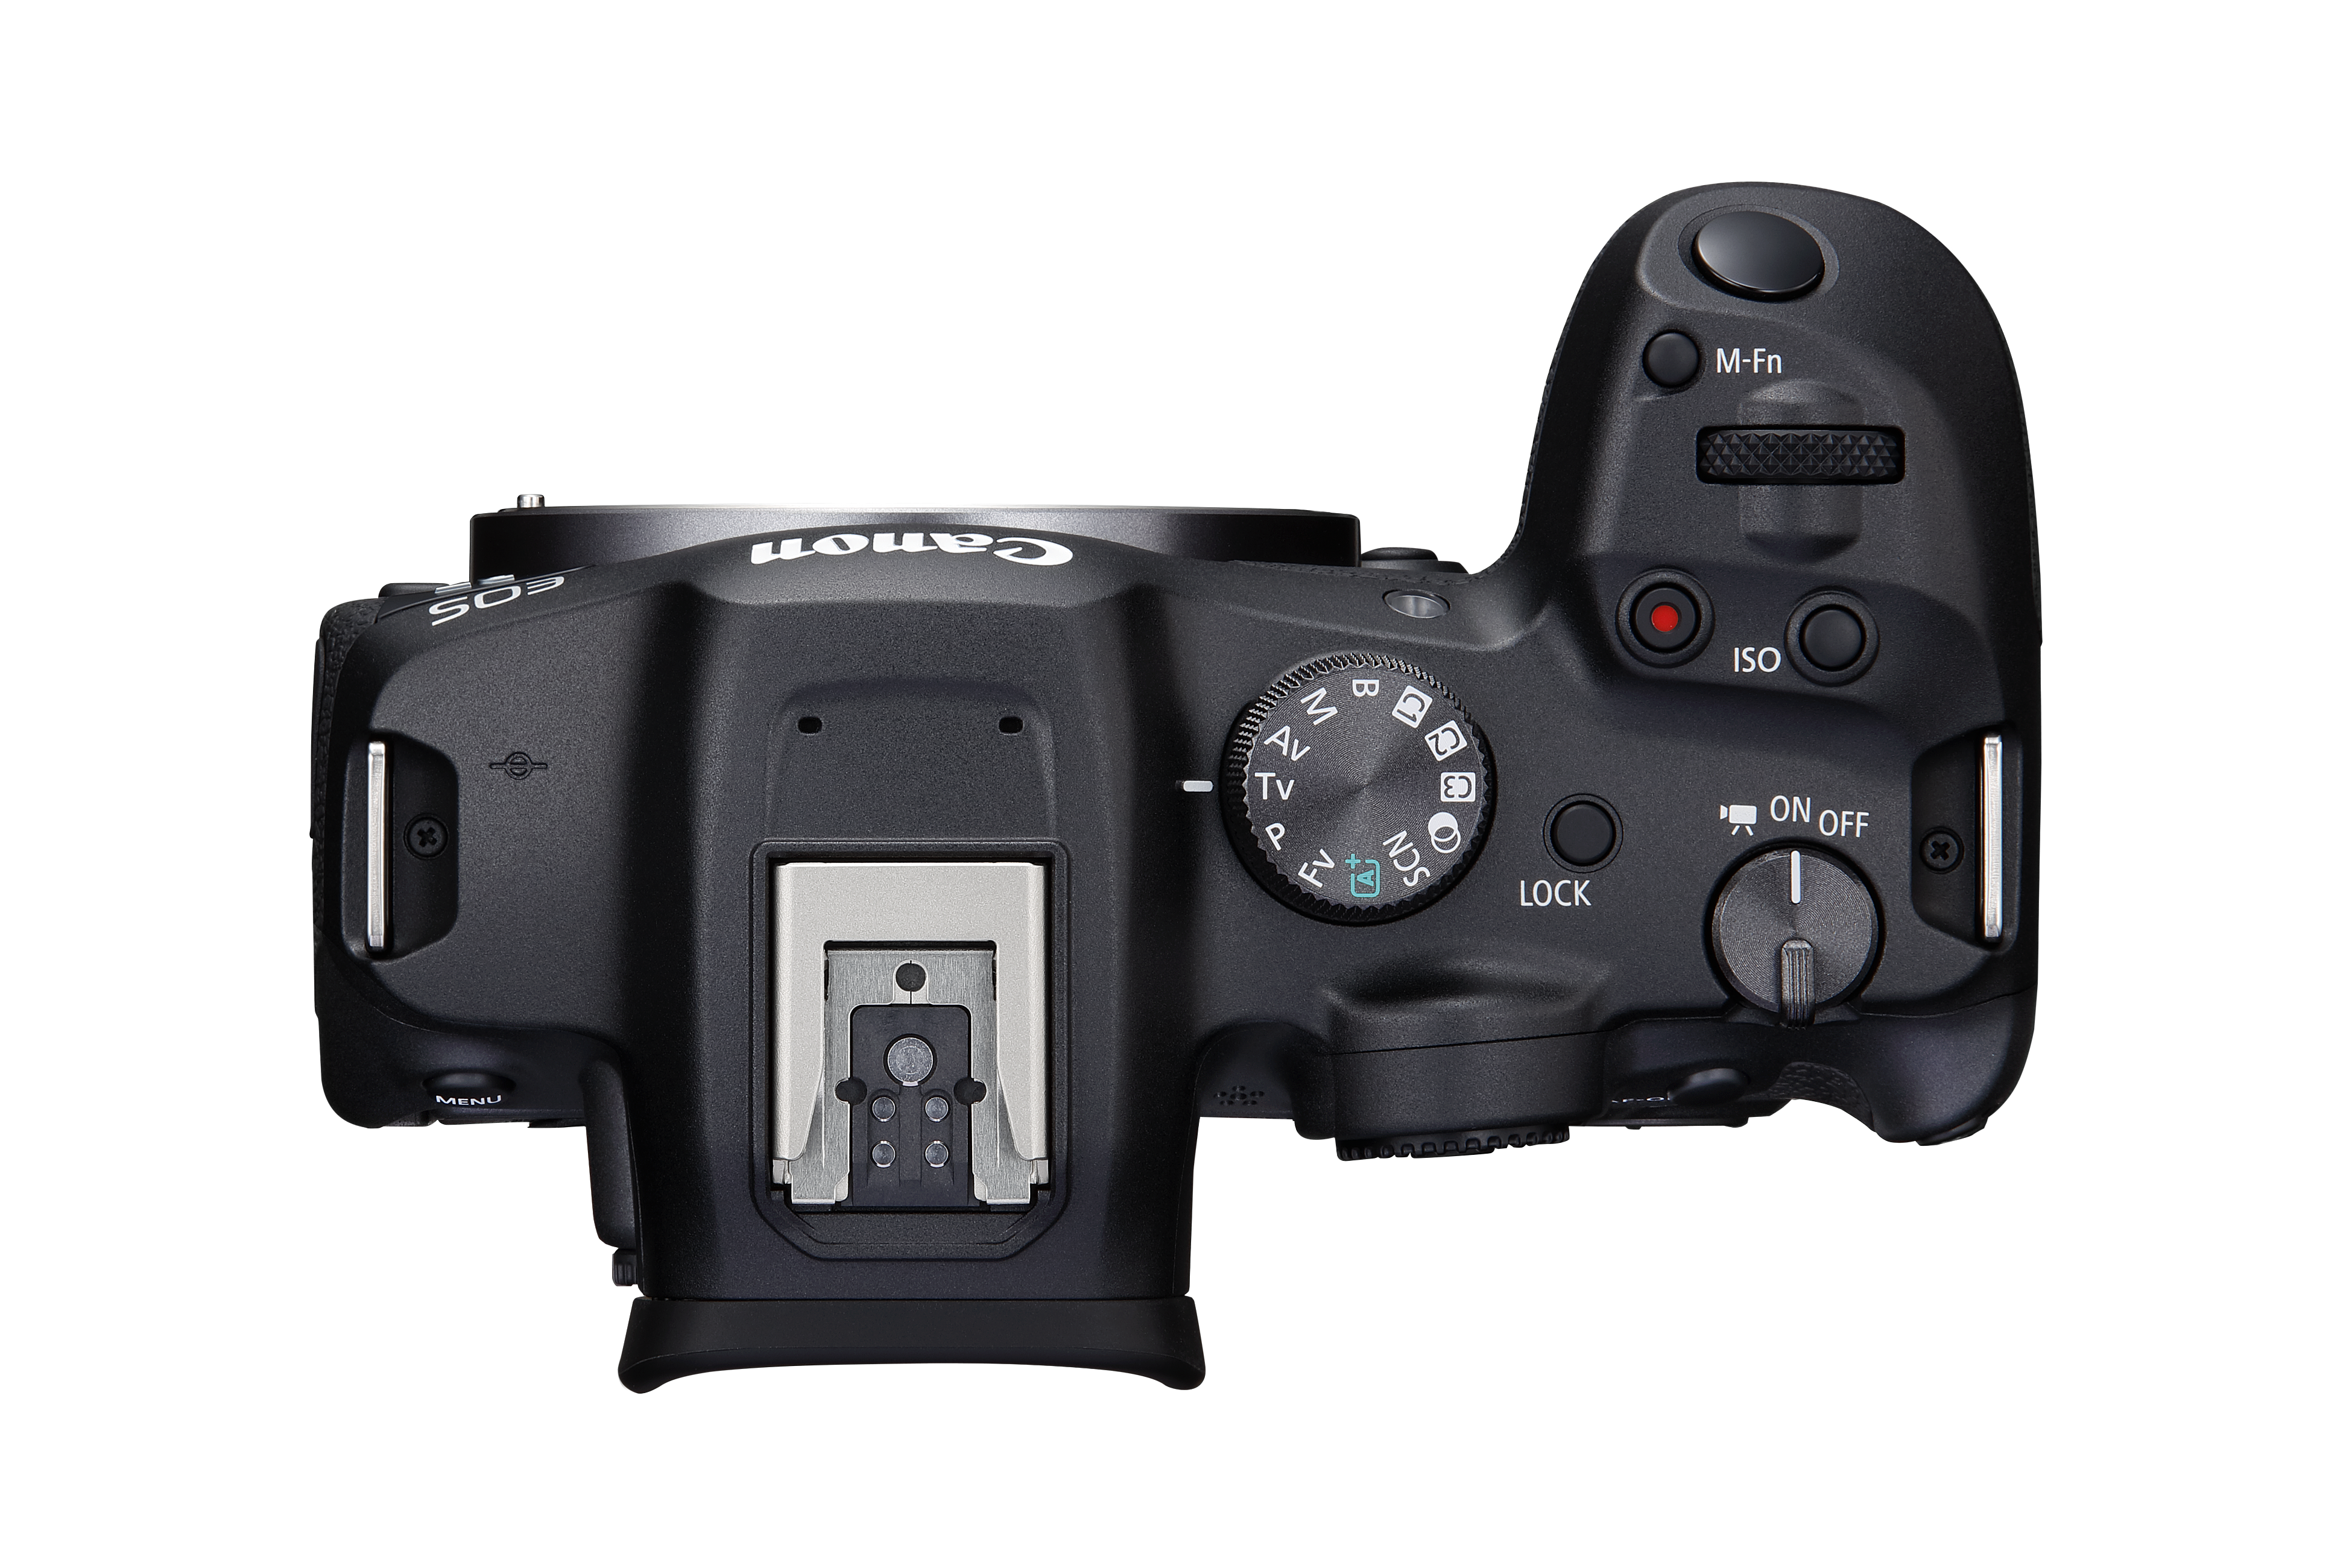 Canon EOS R7 Mirrorless Camera Body with Canon RF-S 18-150mm Lens Camera tek